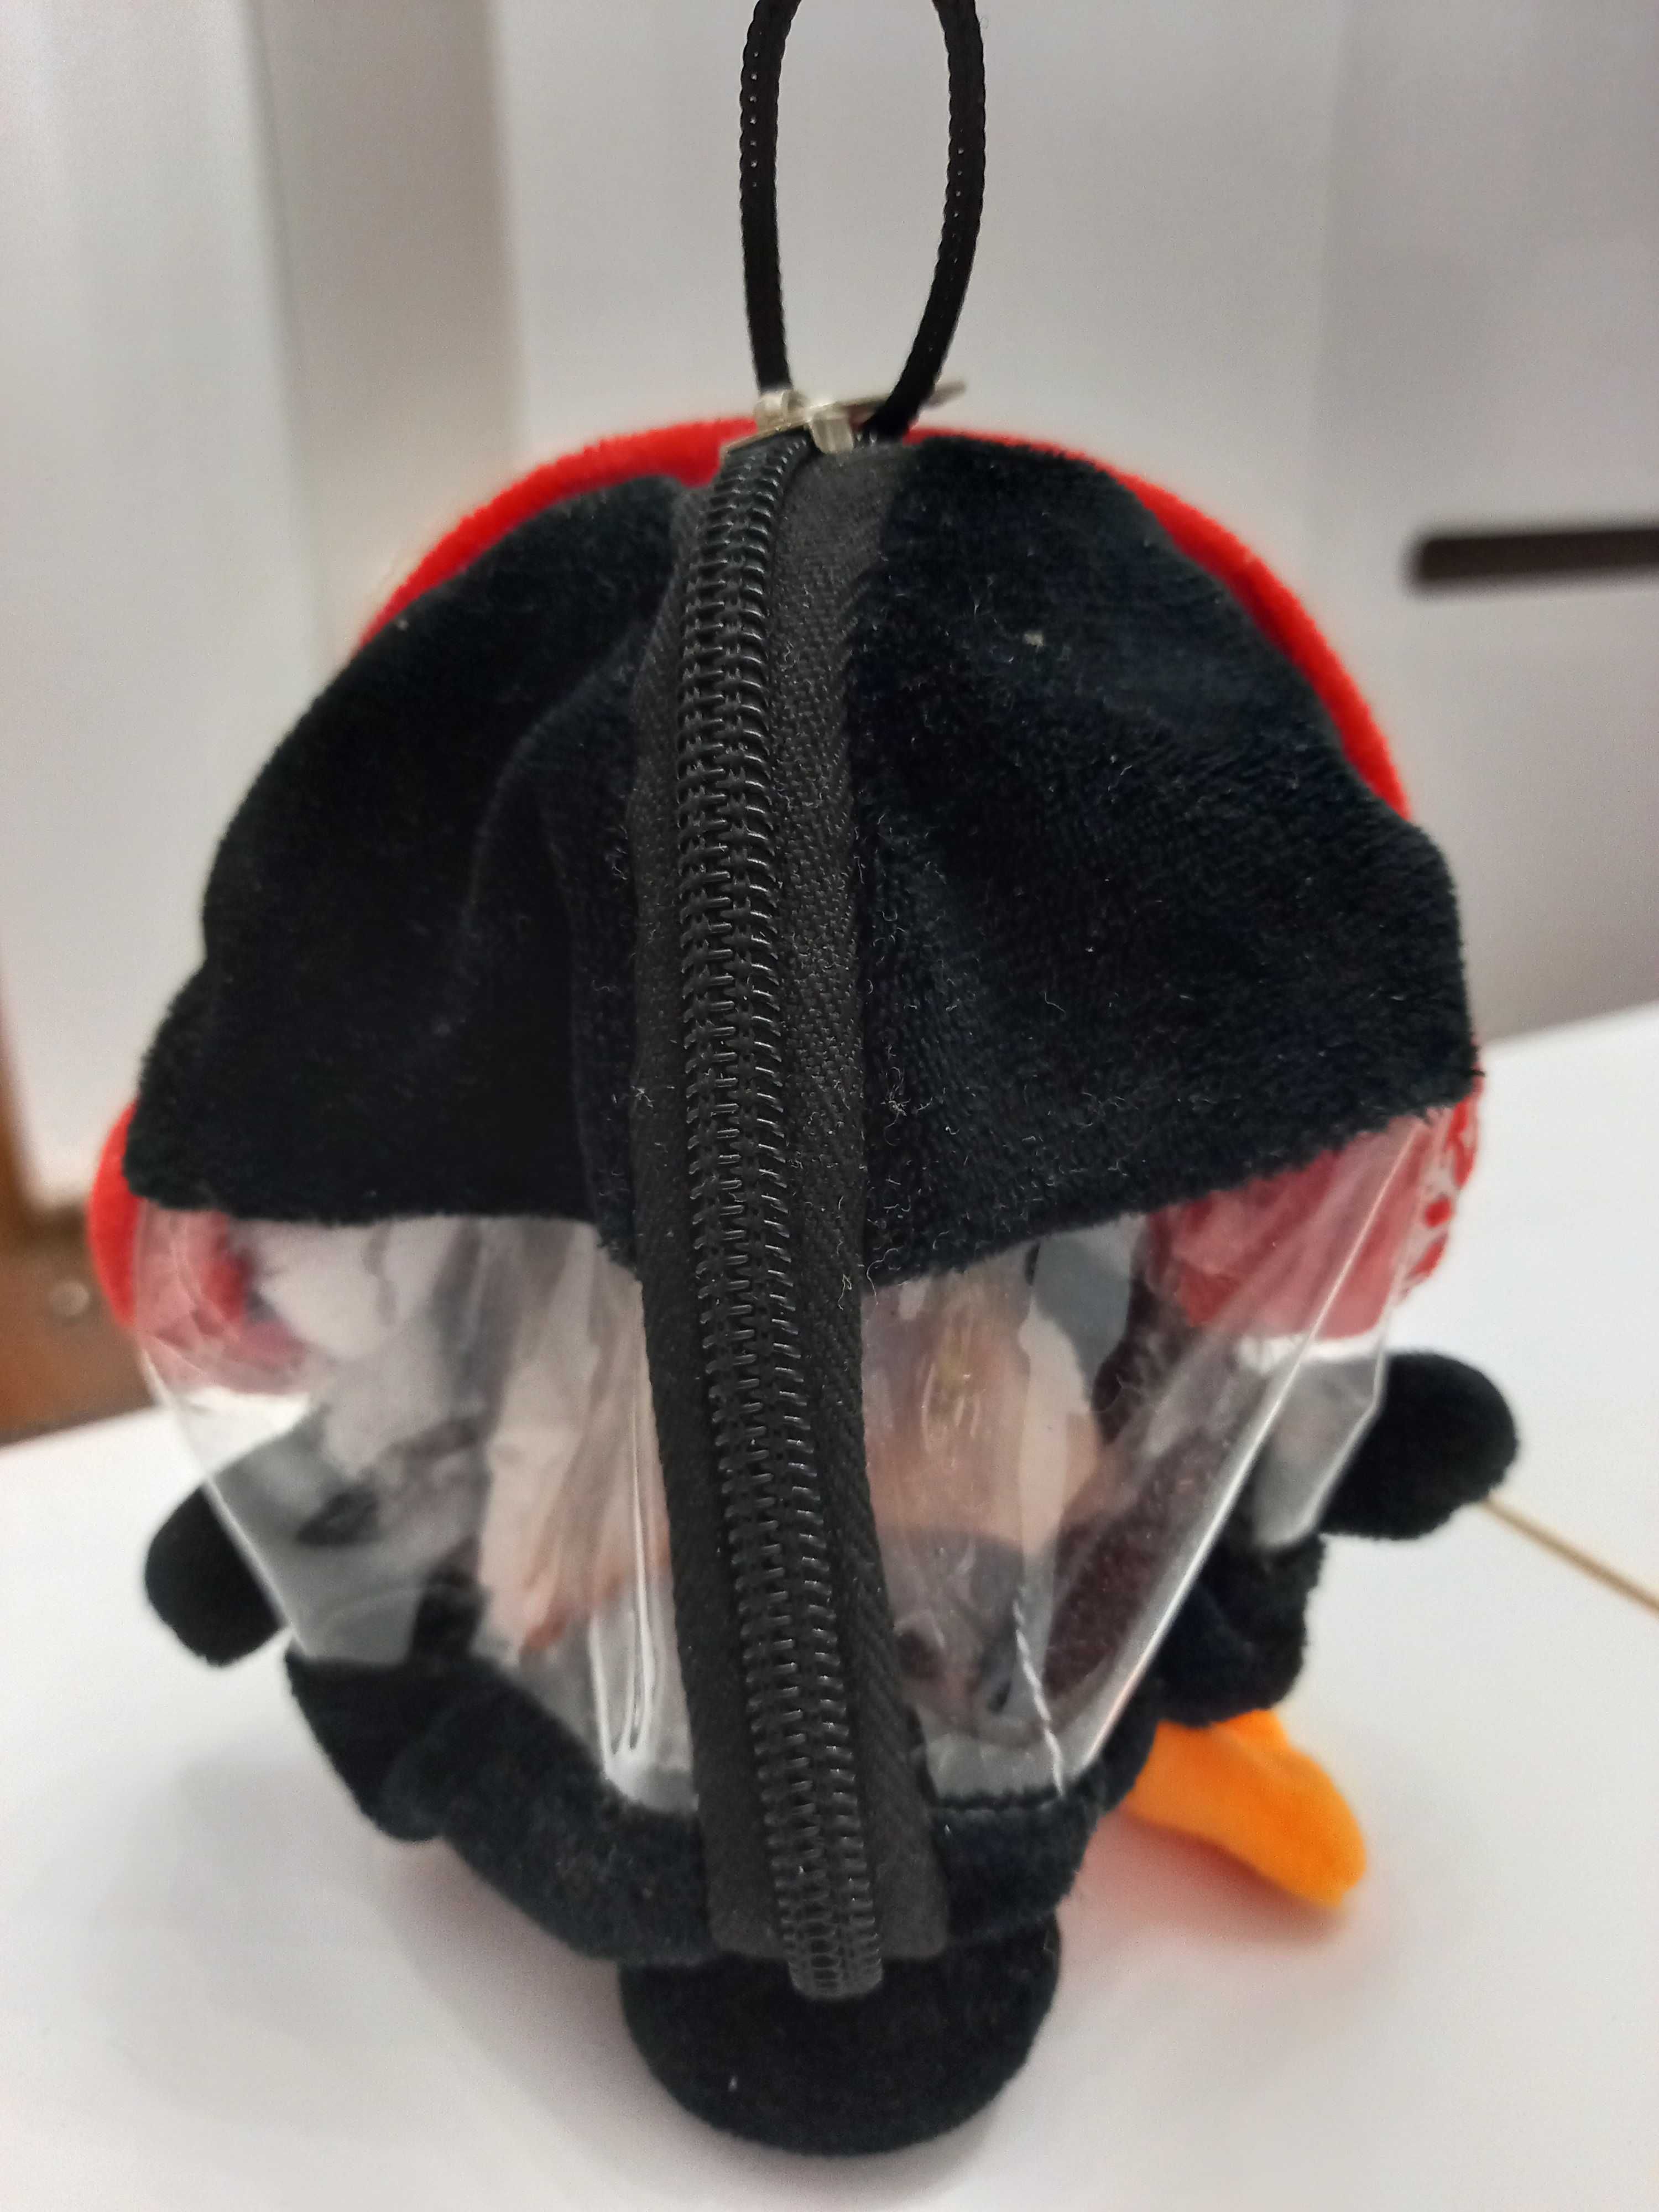 кошелек сумочка Птичка Пингвин с наушниками на молнии косметичка